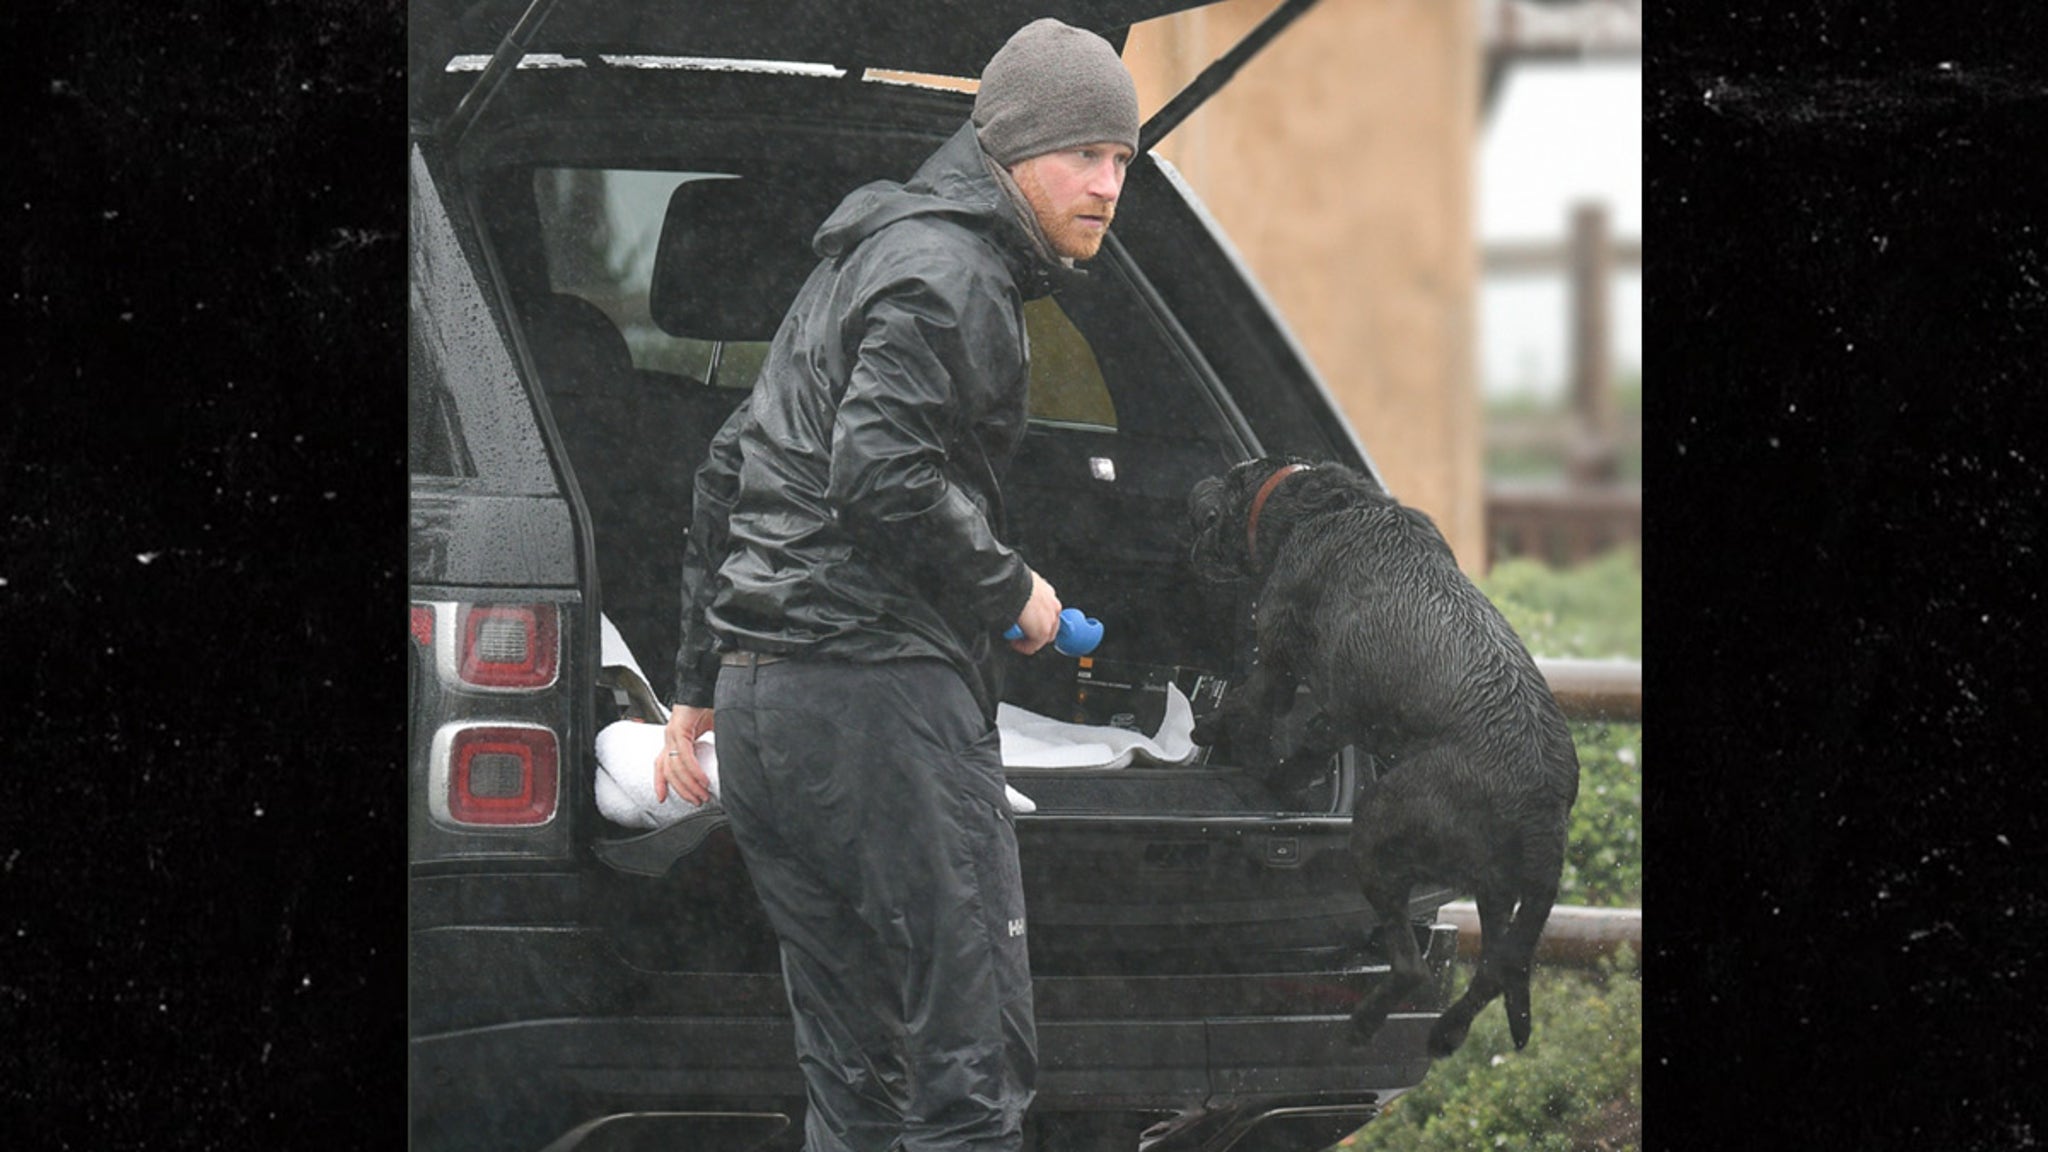 Prince Harry Walks His Dog in Rainstorm Amid Memoir Headlines of Racism, Violence